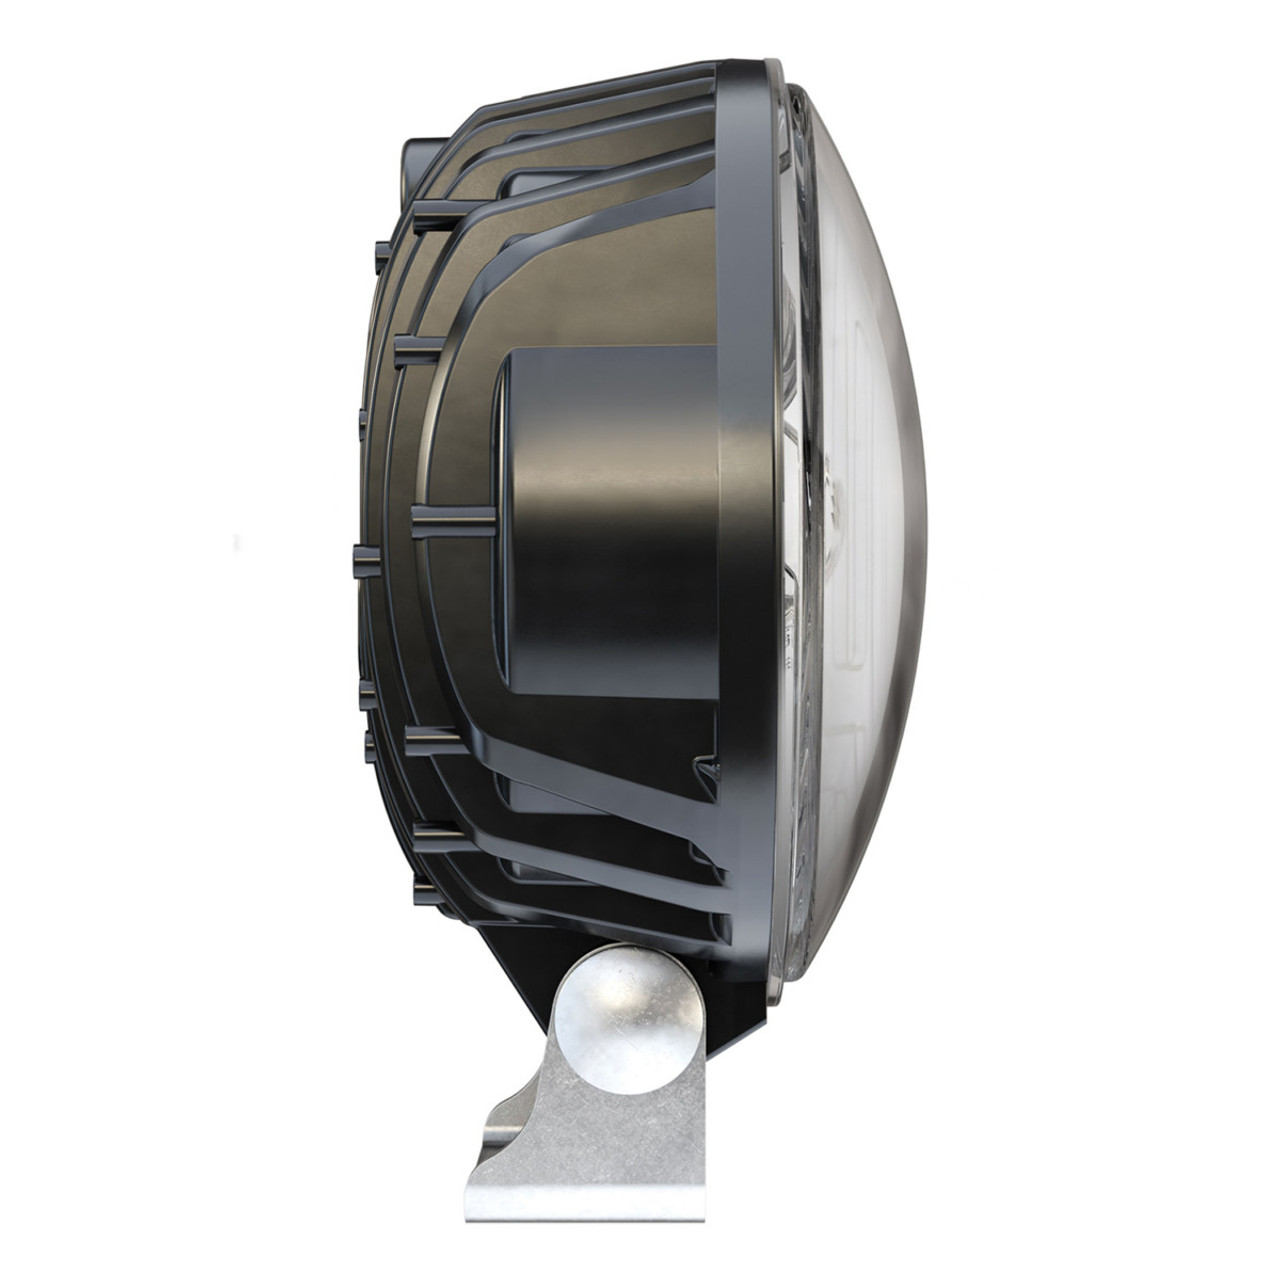 NEW LED Headlight – Model 8633 Evolution 5.75" Round LED Headlights with Pedestal Mount SET